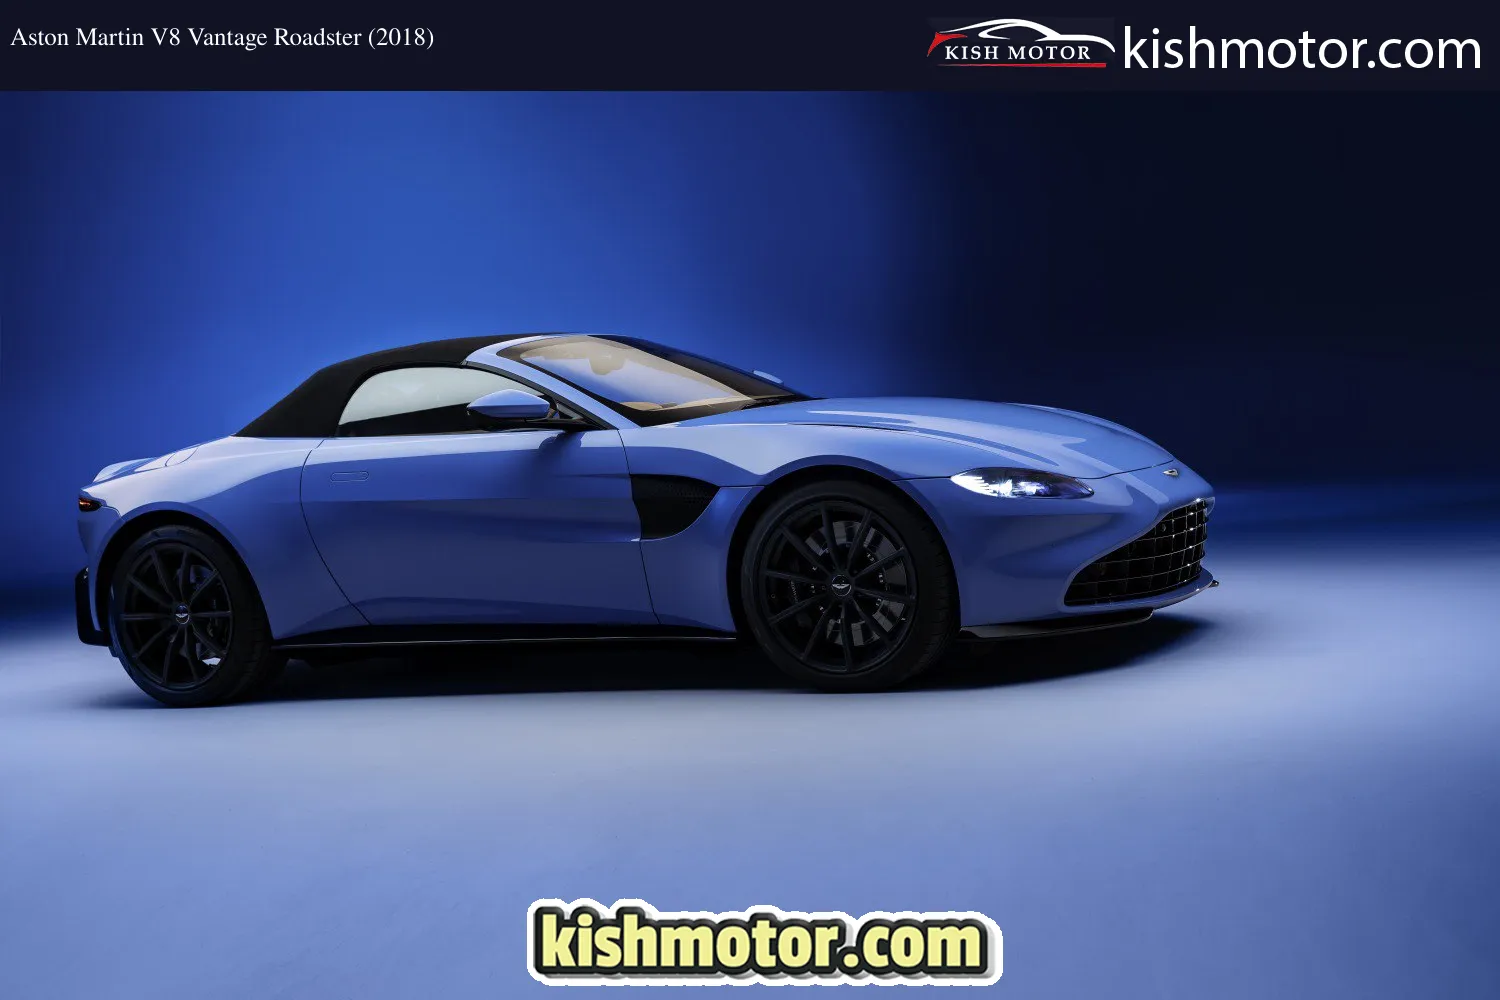 Aston Martin V8 Vantage Roadster (2018)